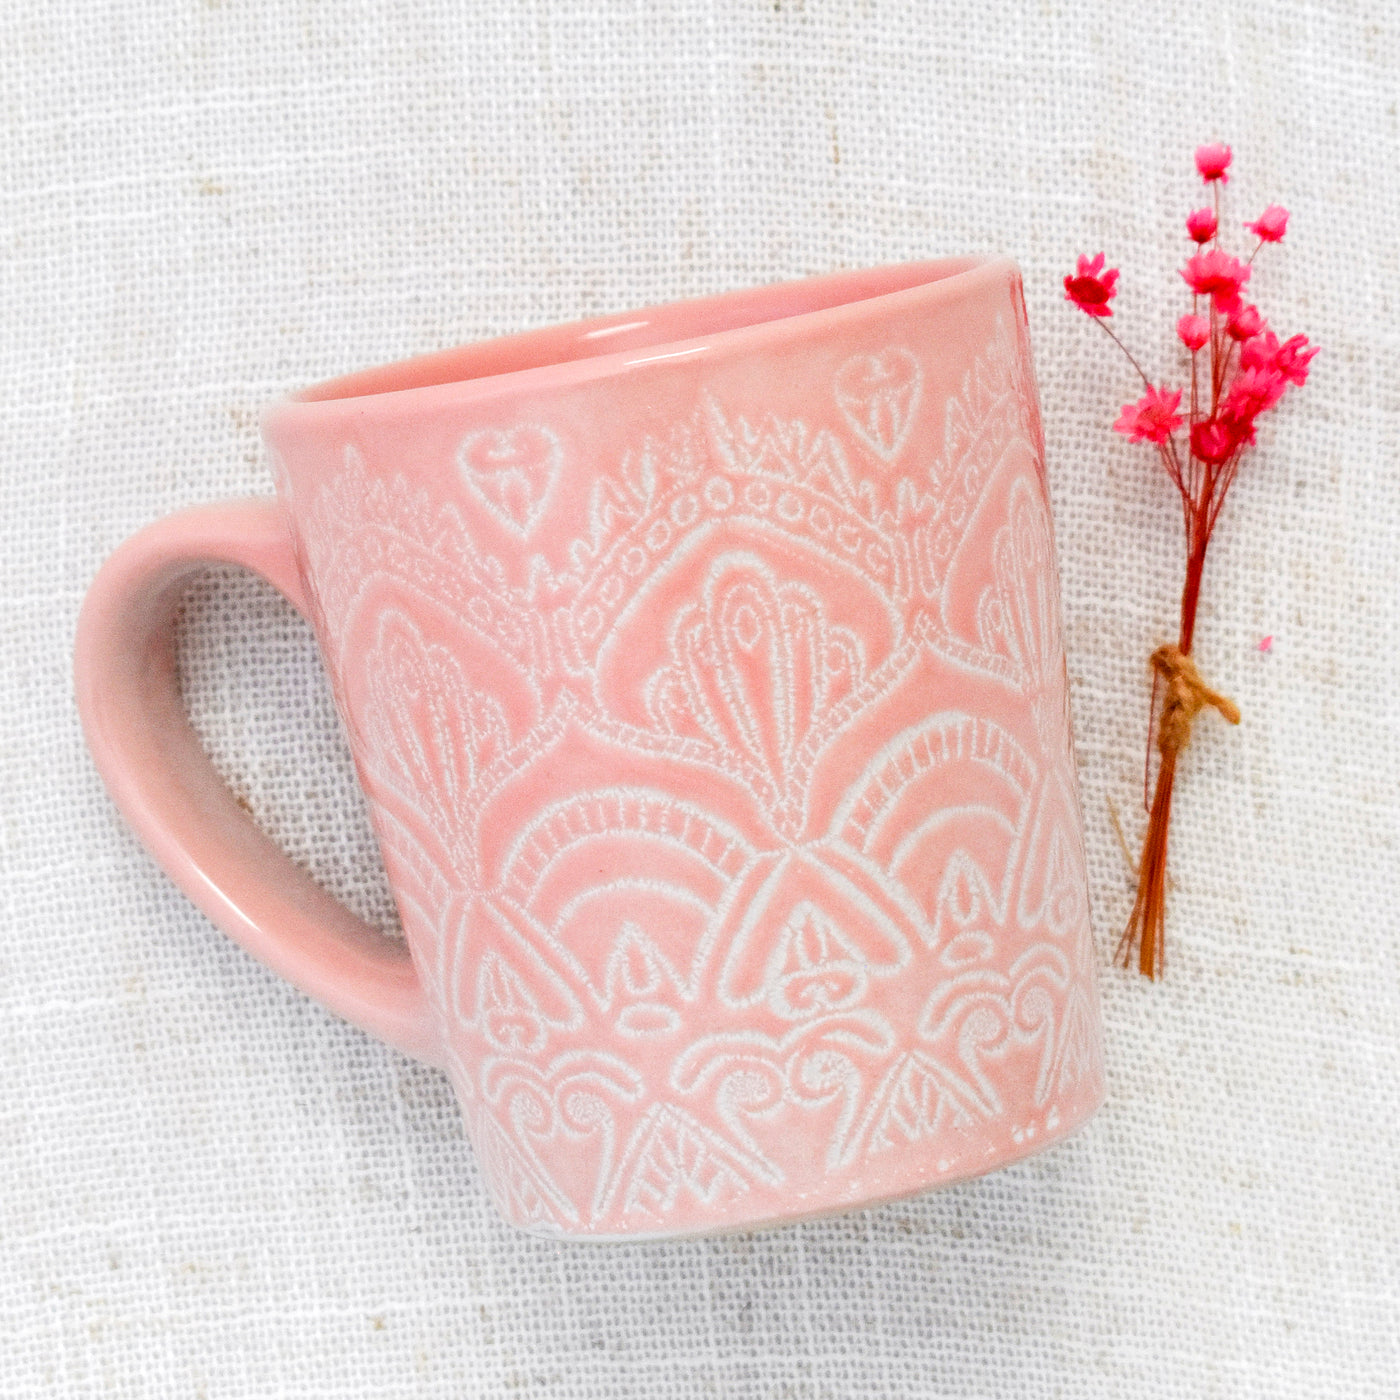 Moms Matter gift box. Close up of Ceramic Etched Mug